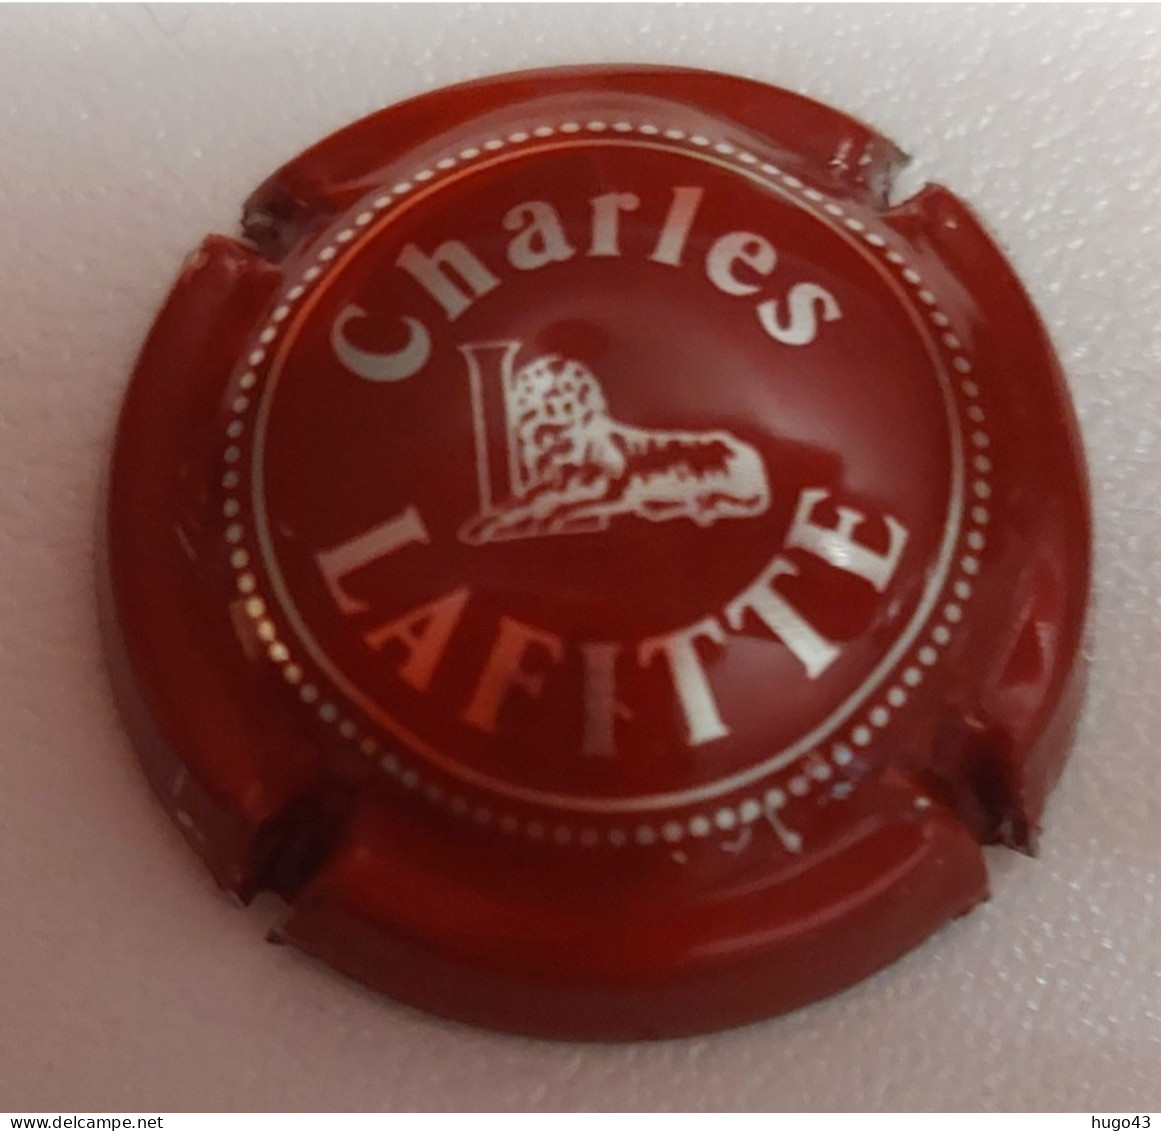 CAPSULE CHAMPAGNE CHARLES LAFITTE ROUGE - Lafitte, Charles